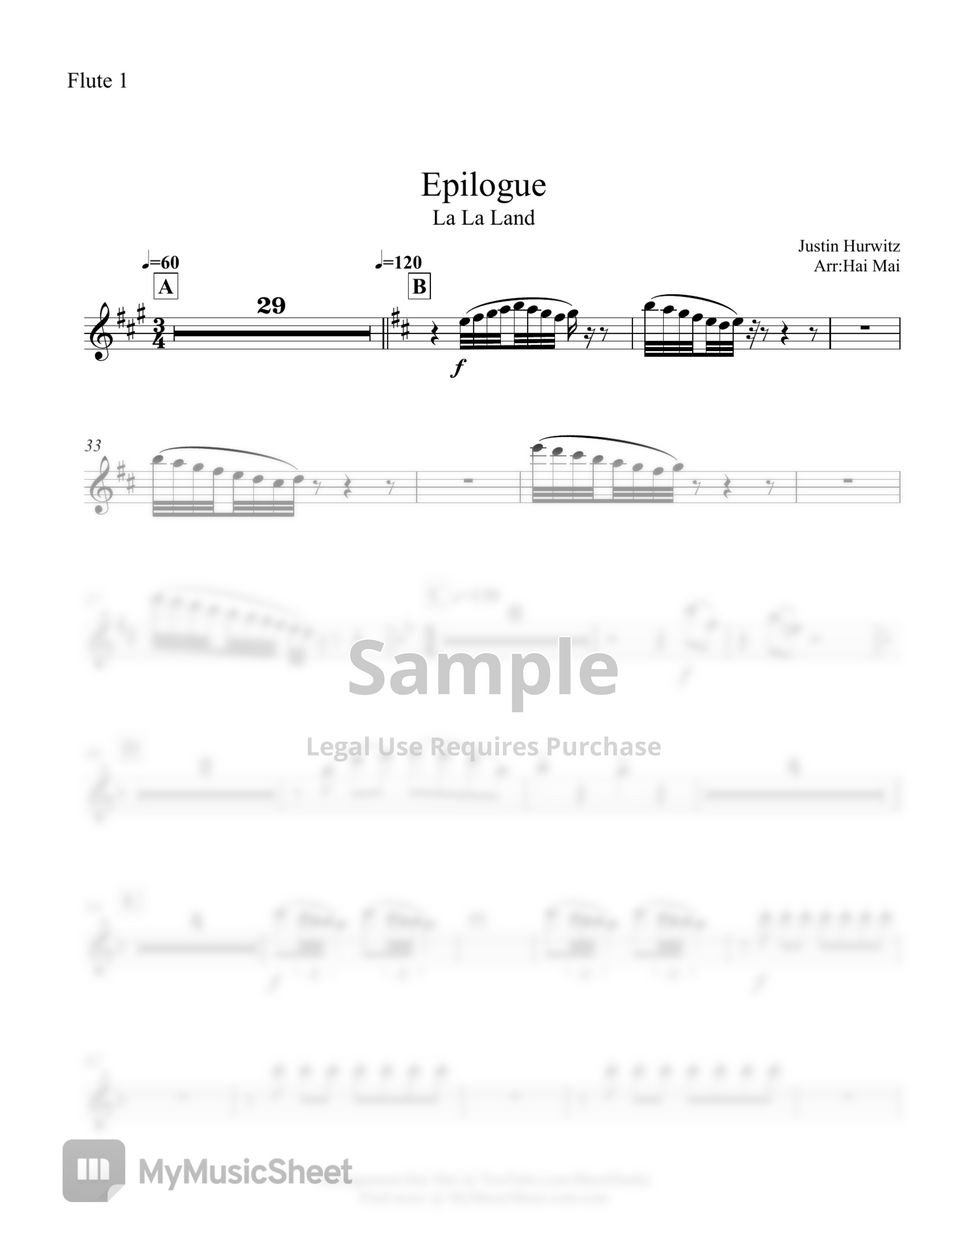 Justin Hurwitz - Epilogue(La La Land) for Orchestra - Set of Part by Hai Mai